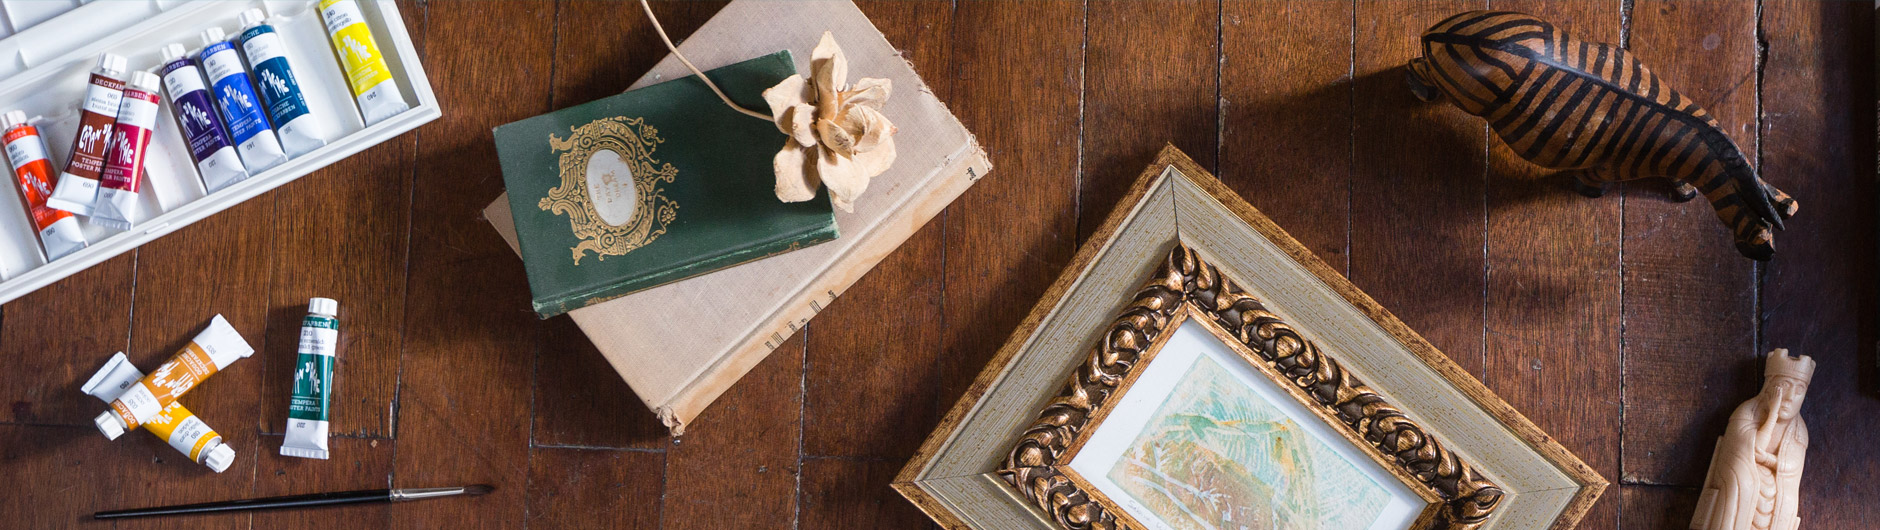 Paints, books, and a framed photo on a dark hardwood floor